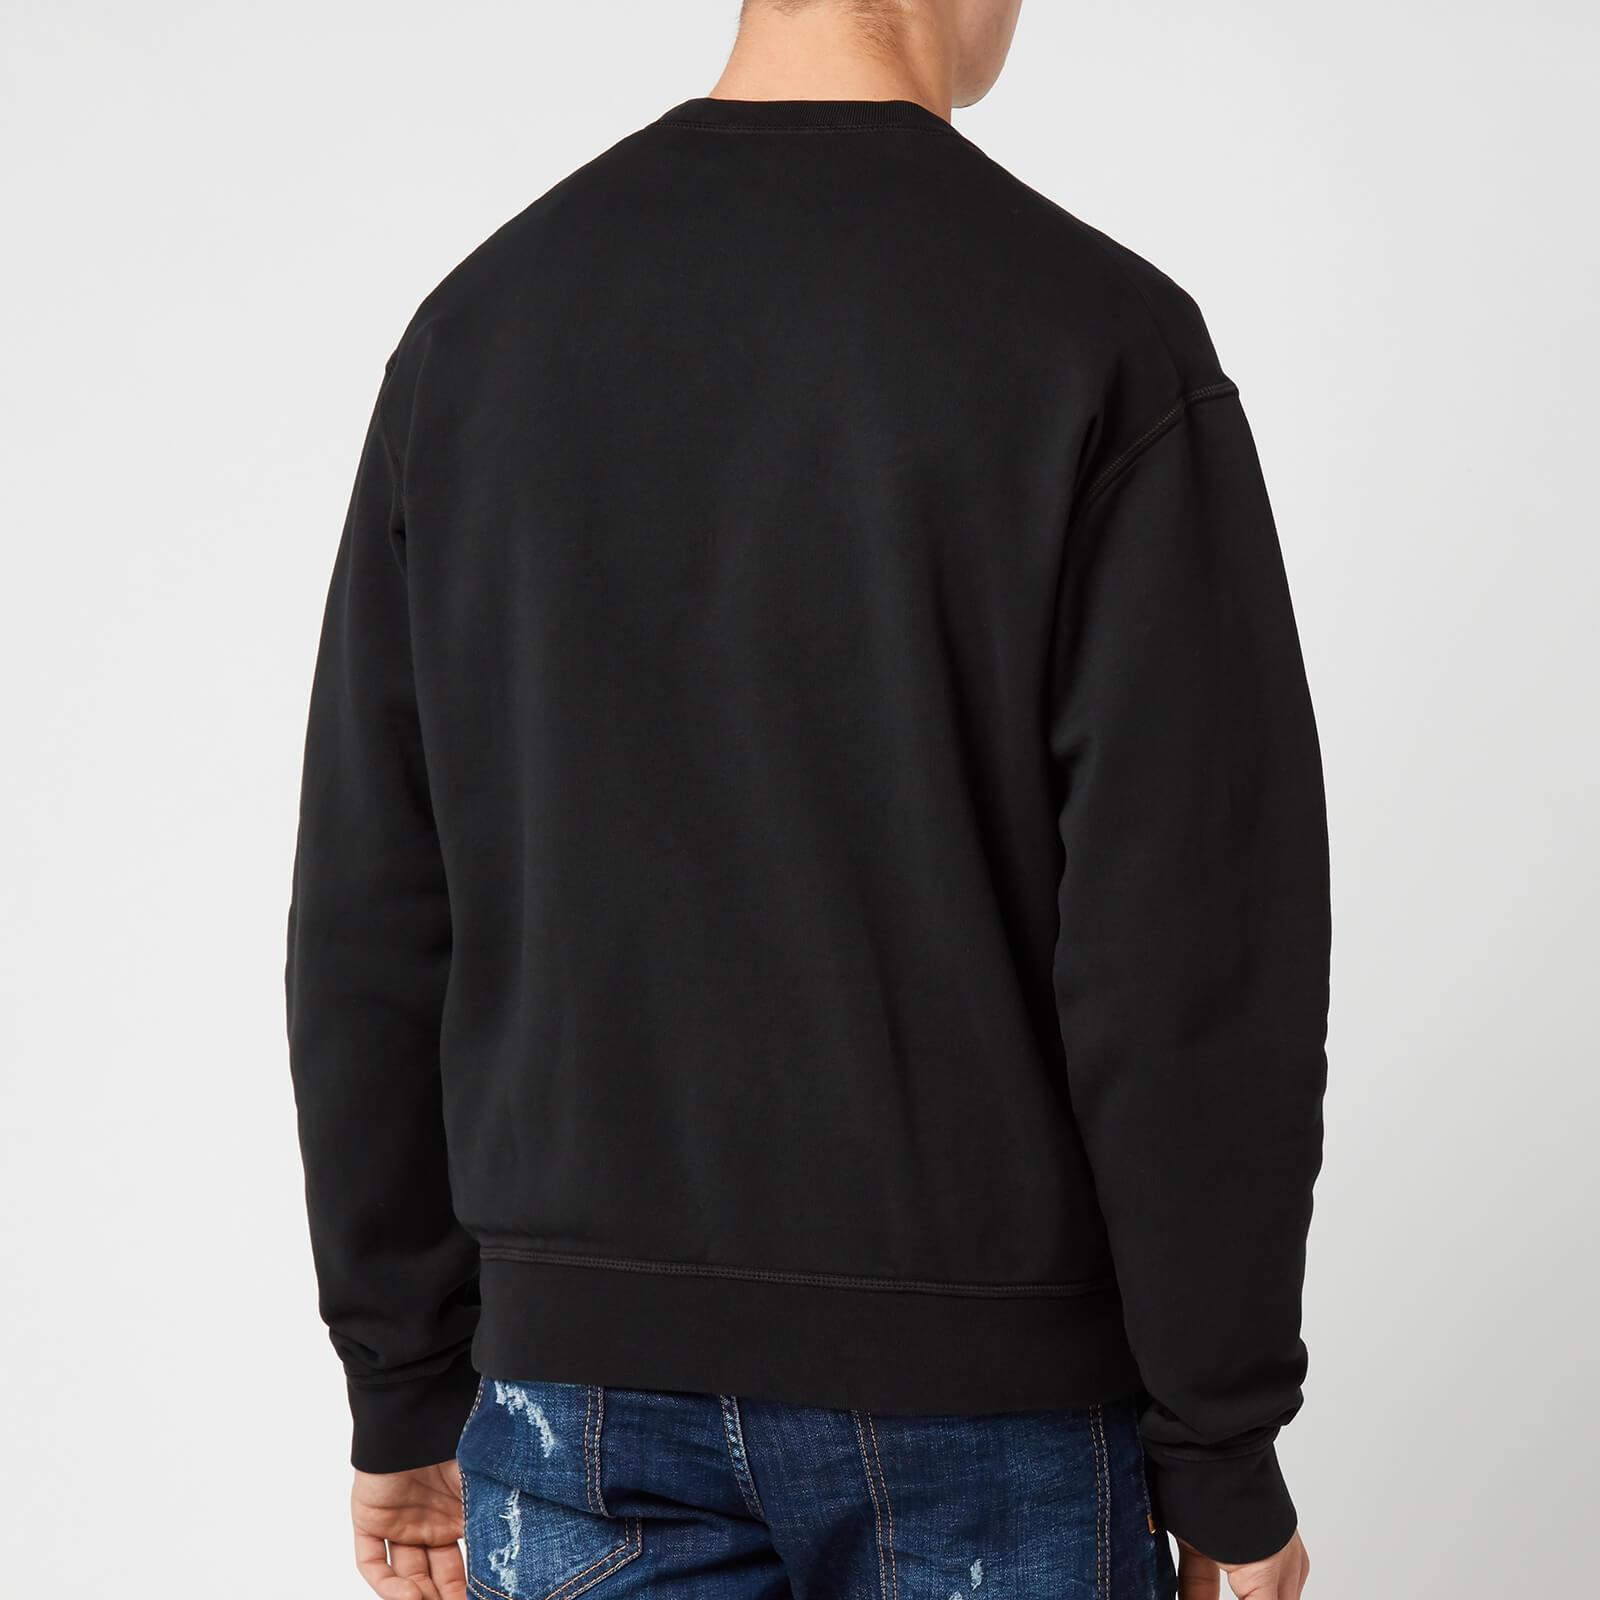 DSquared² Dsquared Sweatshirt in Black for Men - Lyst